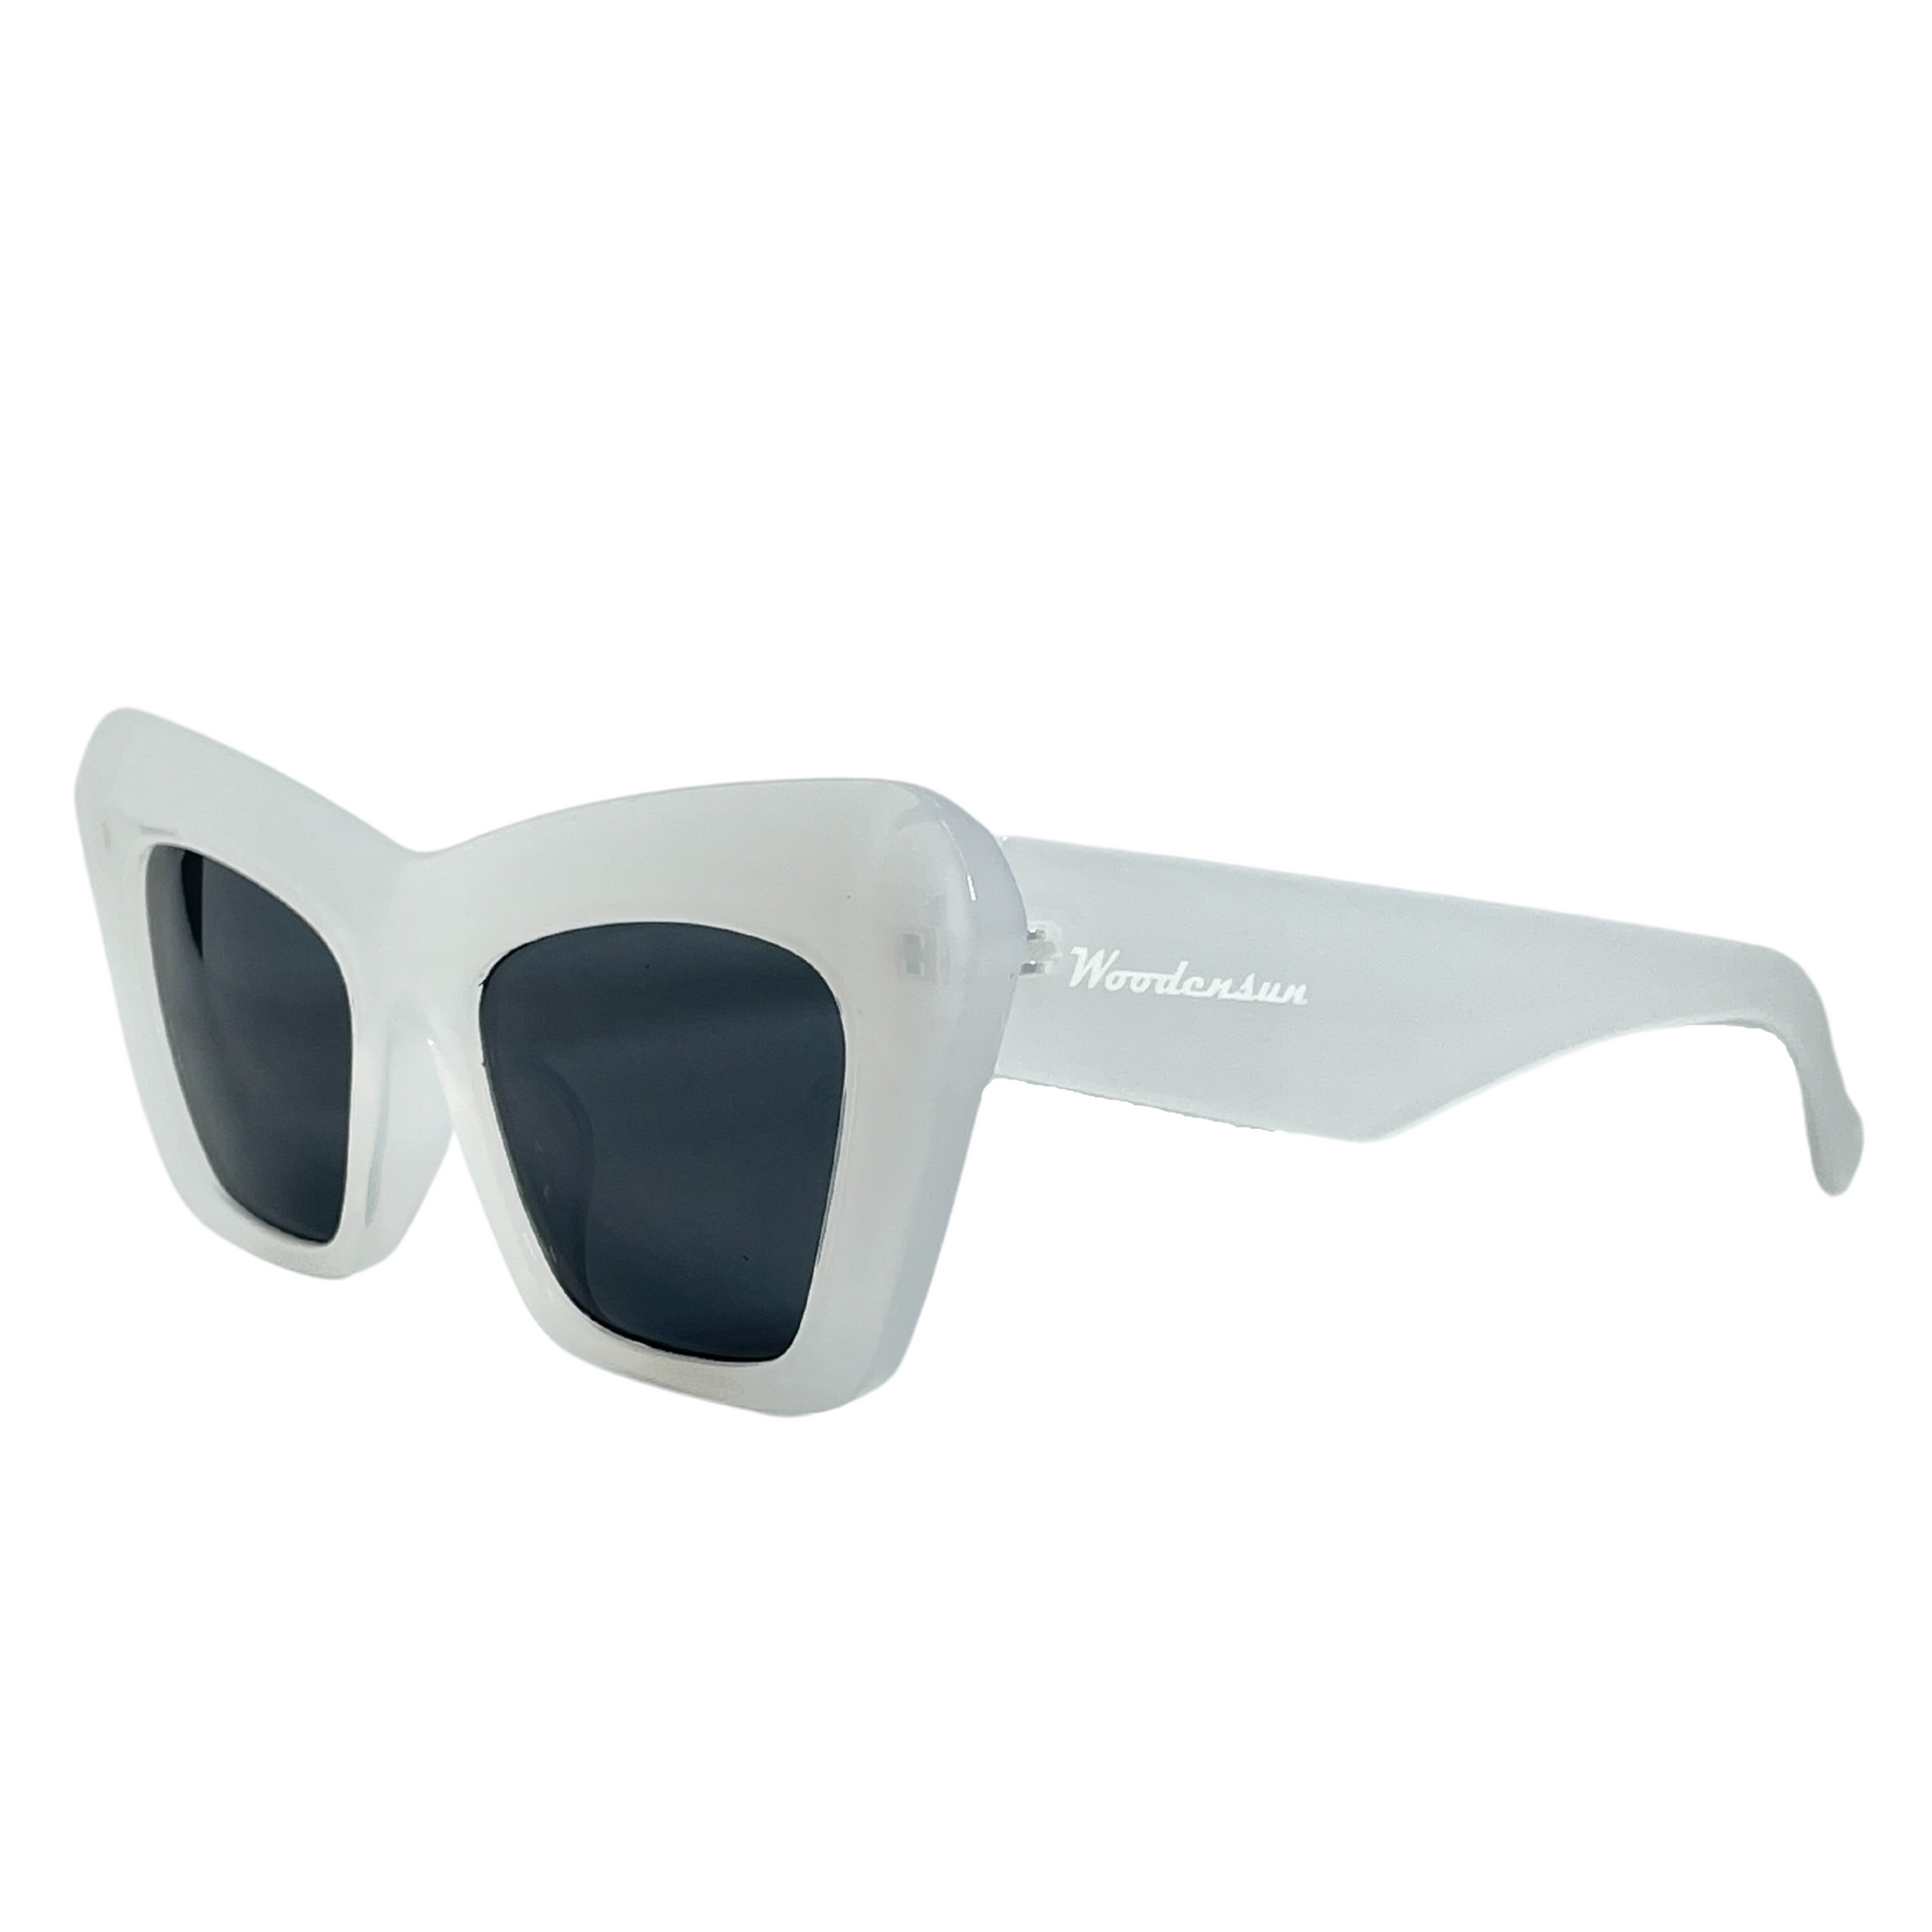 Brickell Sunglasses - Woodensun Sunglasses | Eco-fashion eyewear